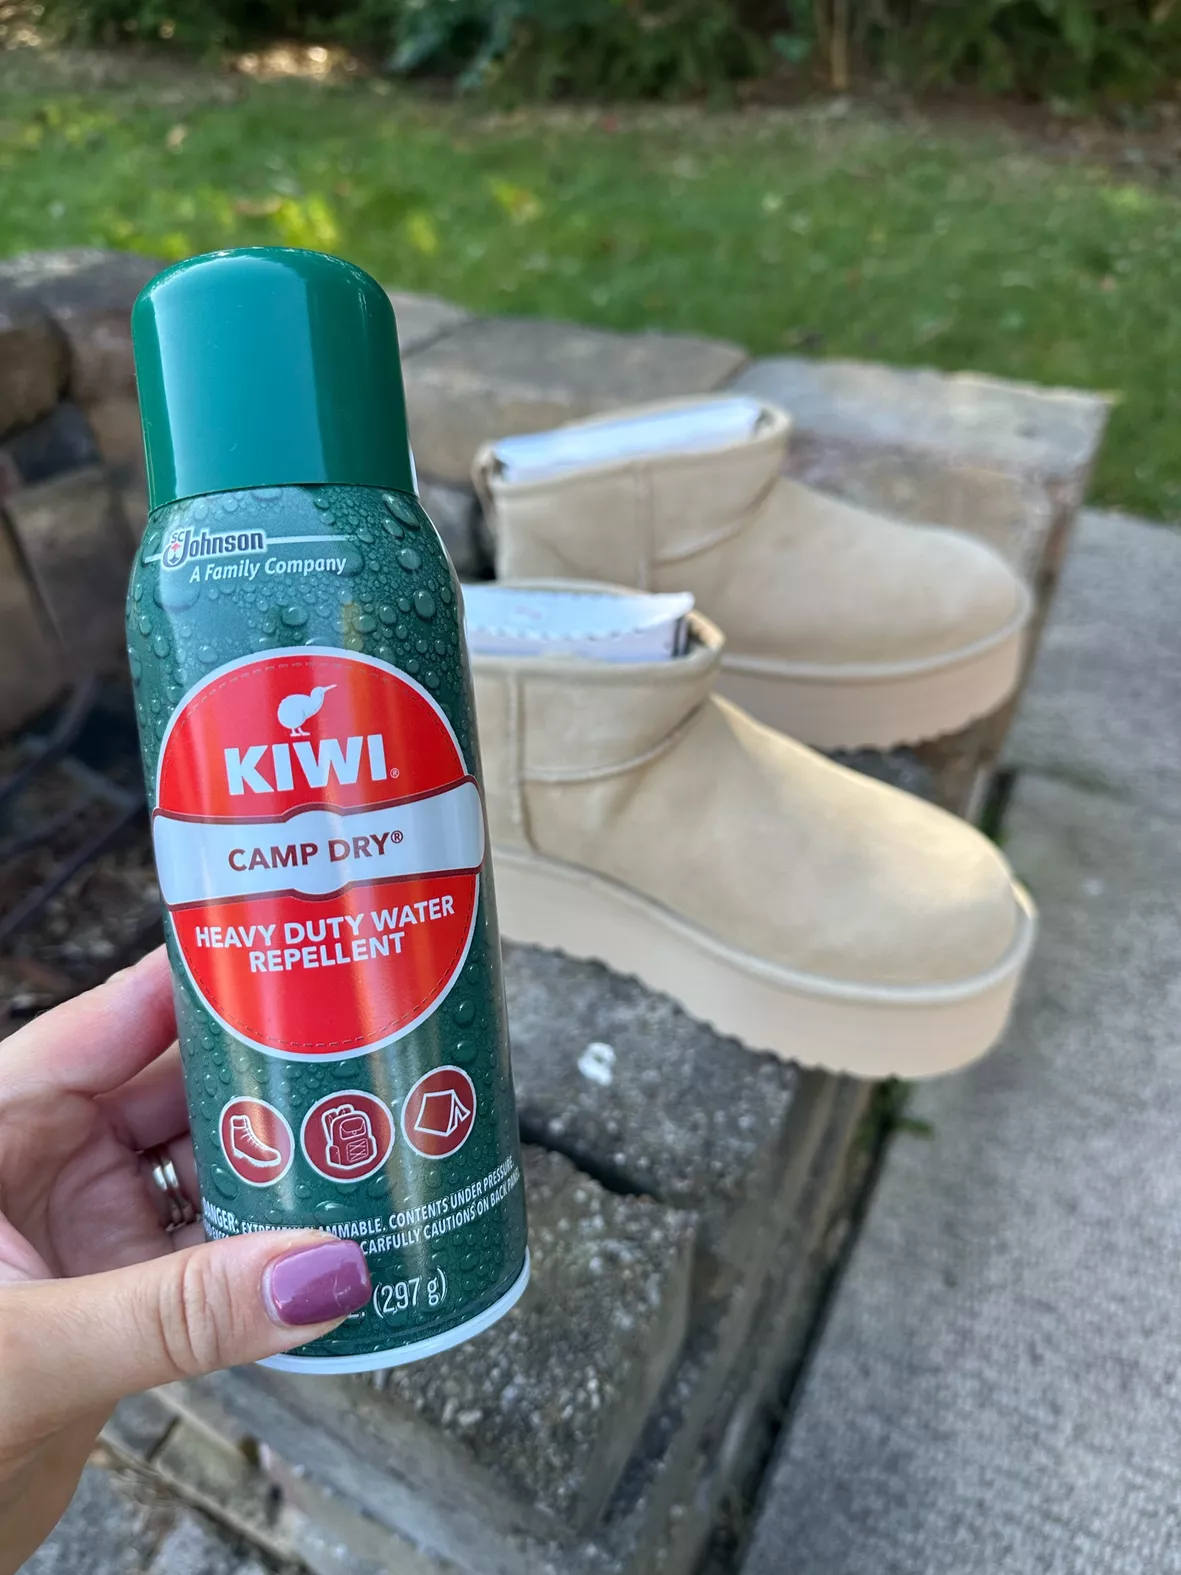 KIWI® Camp Dry Heavy Duty Water Repellent